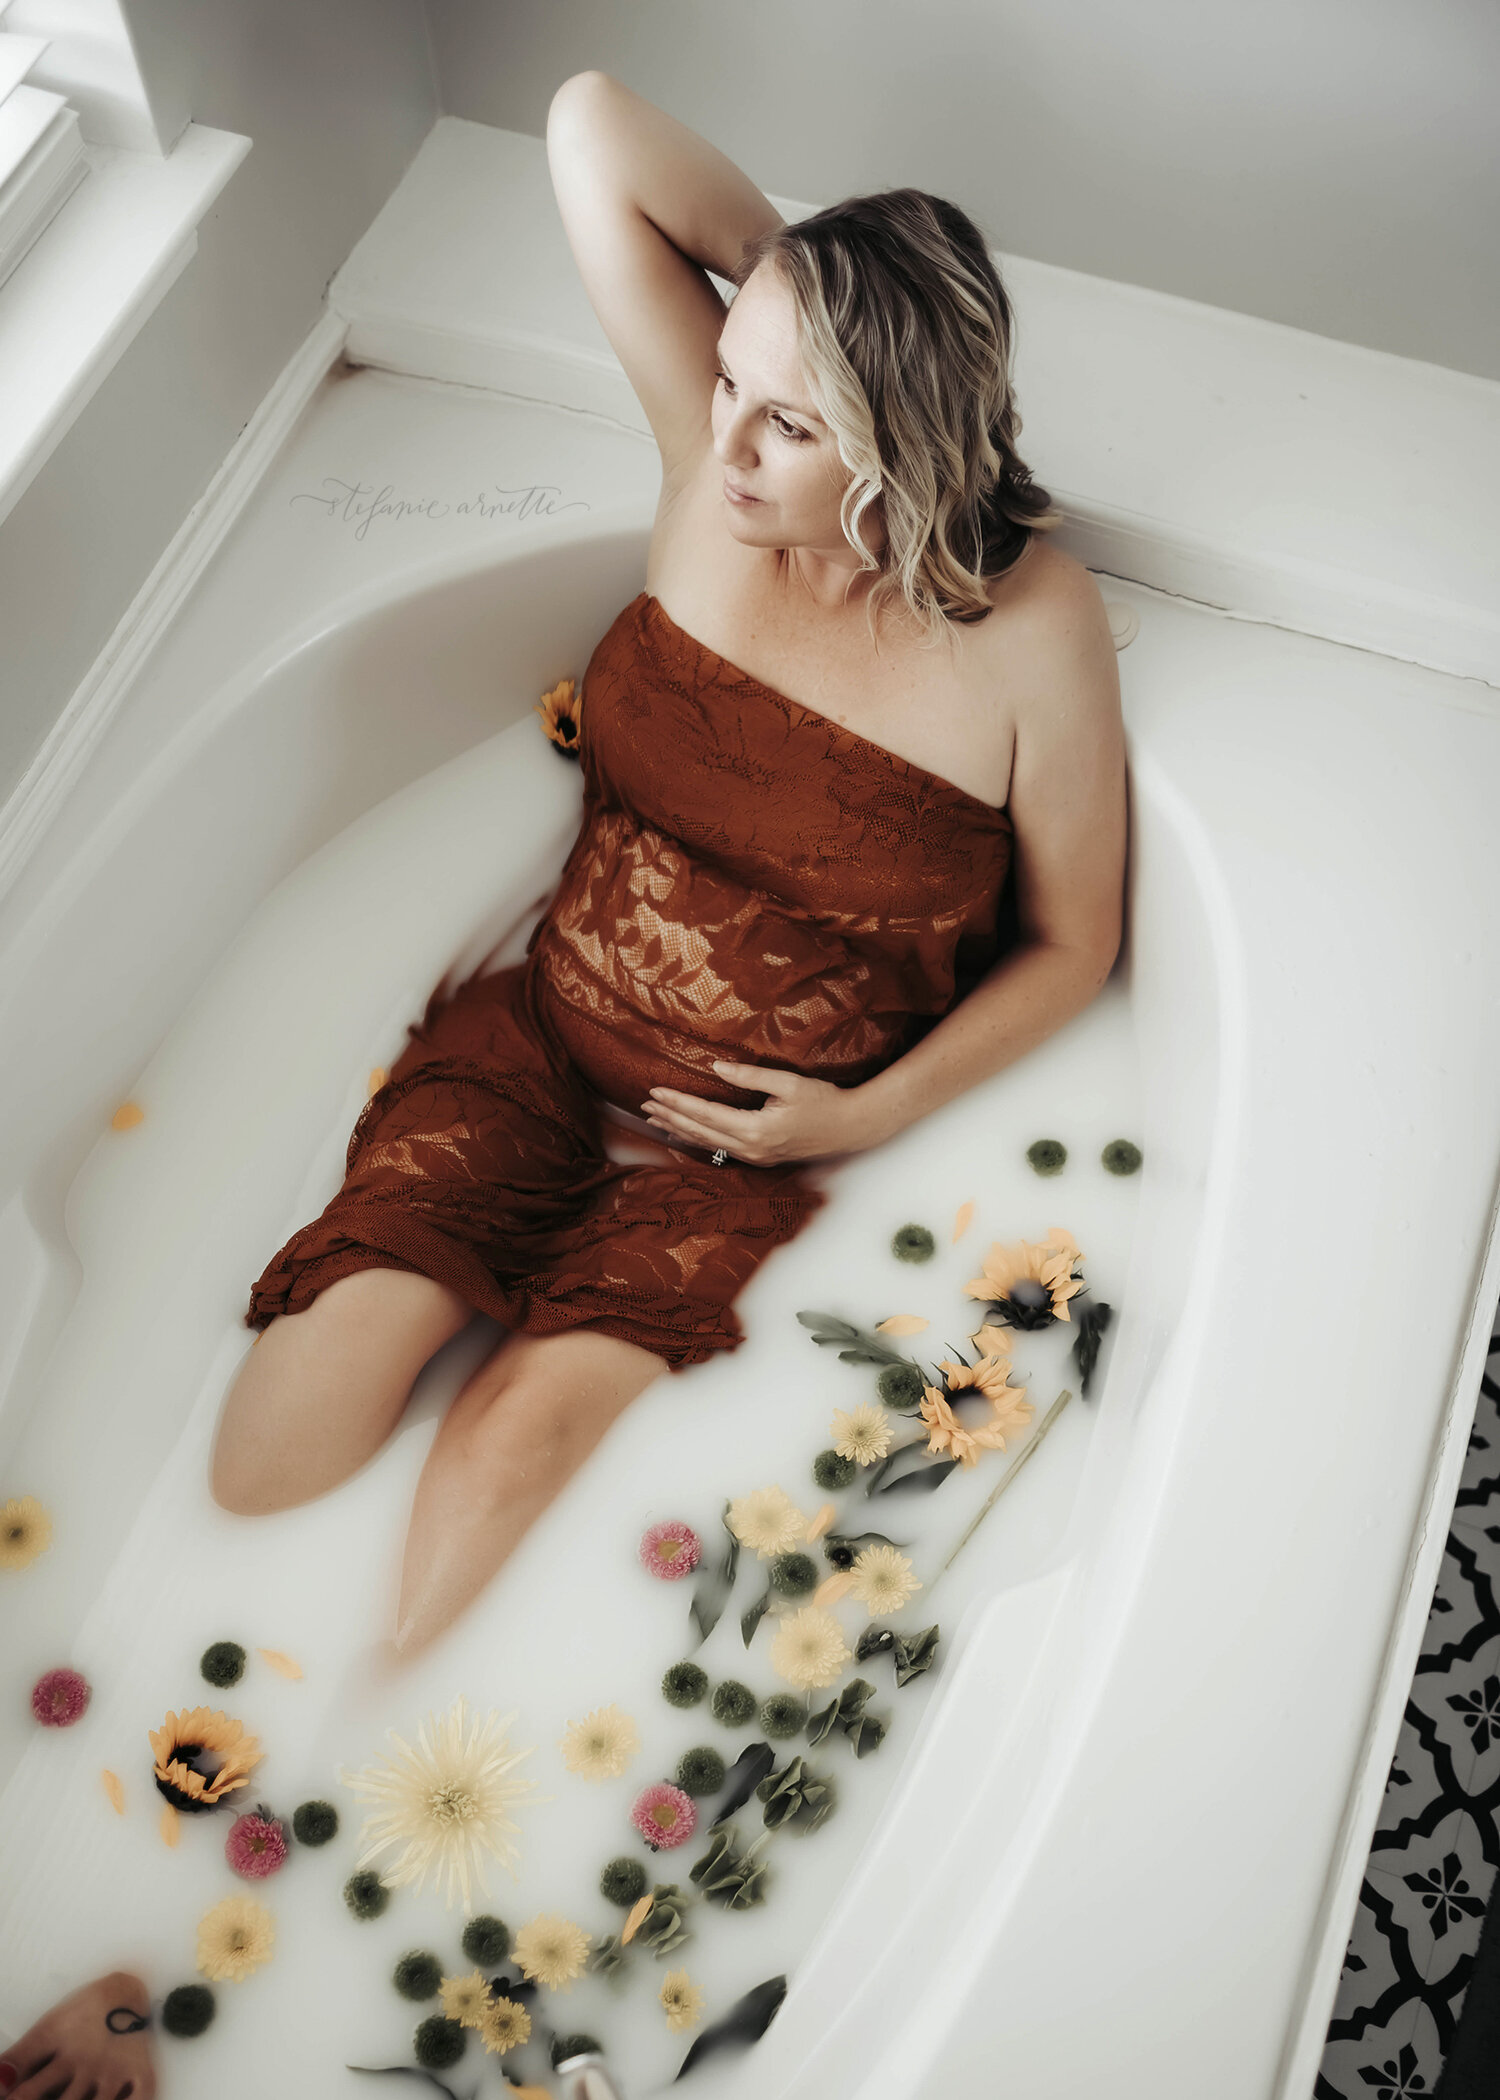 milk bath maternity photography villa rica ga